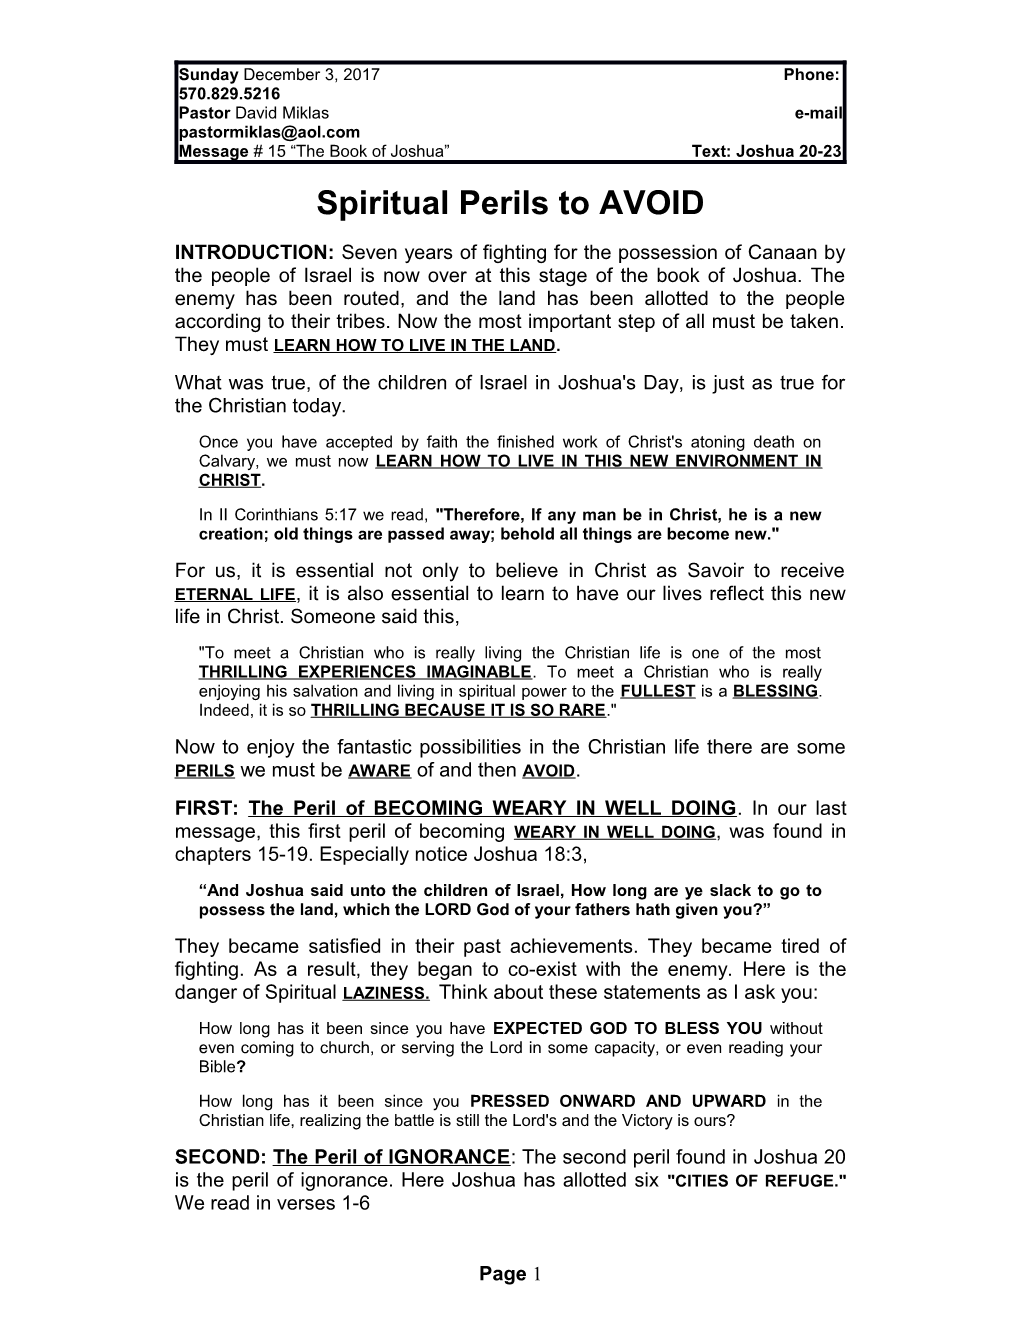 Joshua - Spirital Perils to AVOID